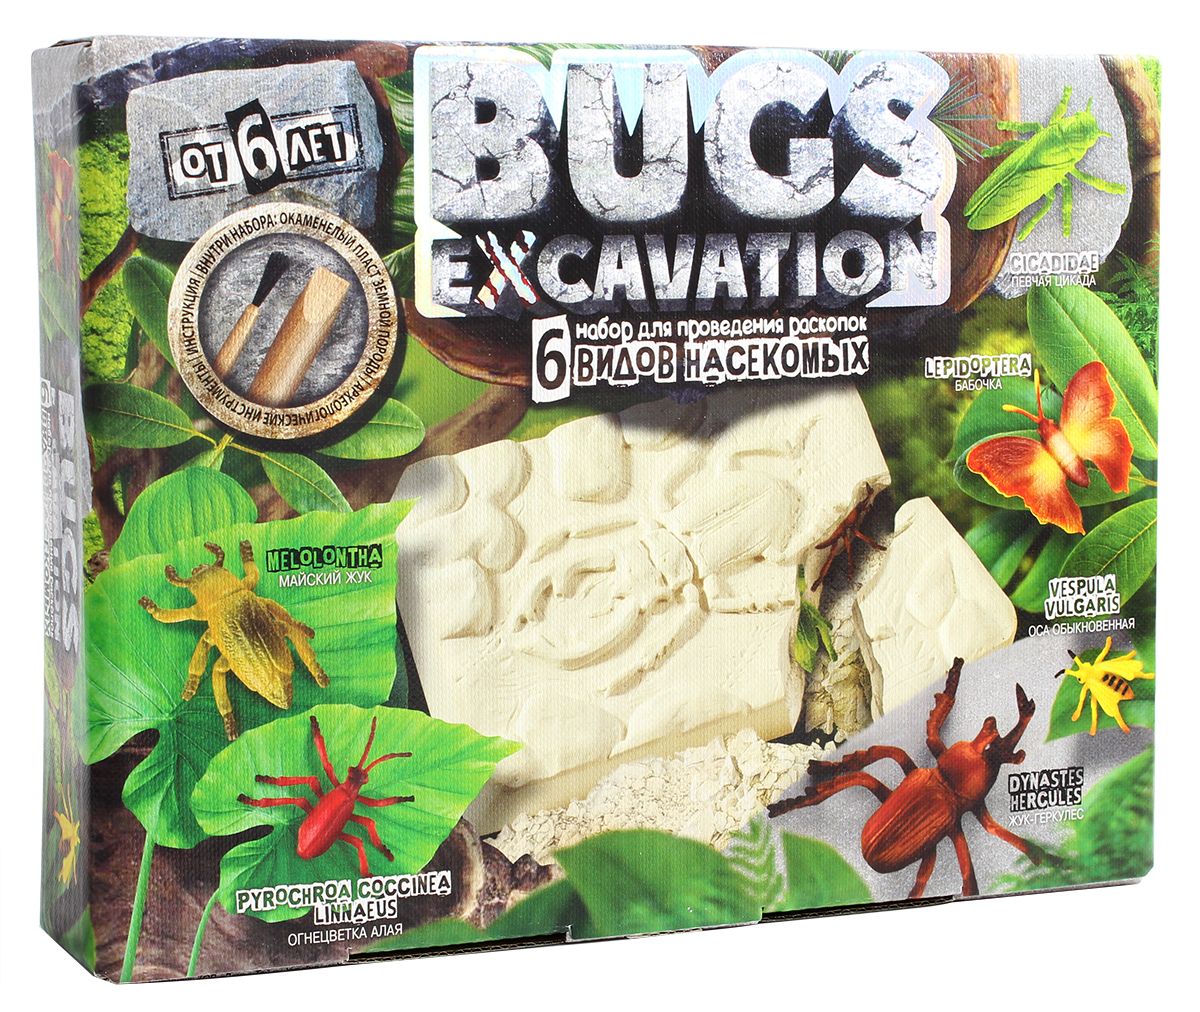     Bugs Excavation   3